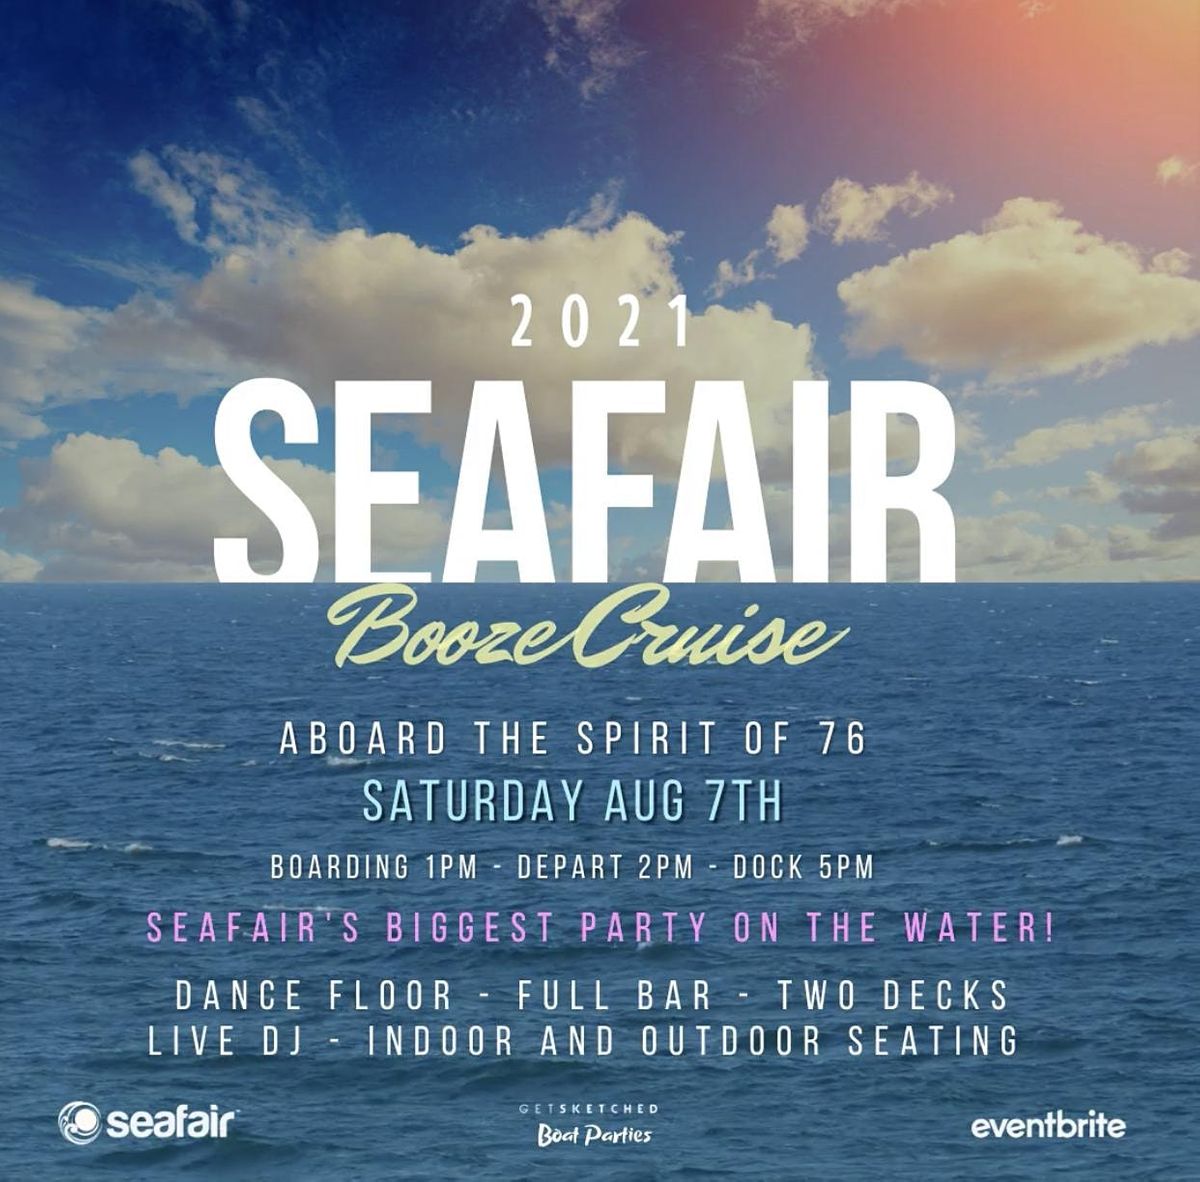 Seafair Booze Cruise 2021 - Saturday